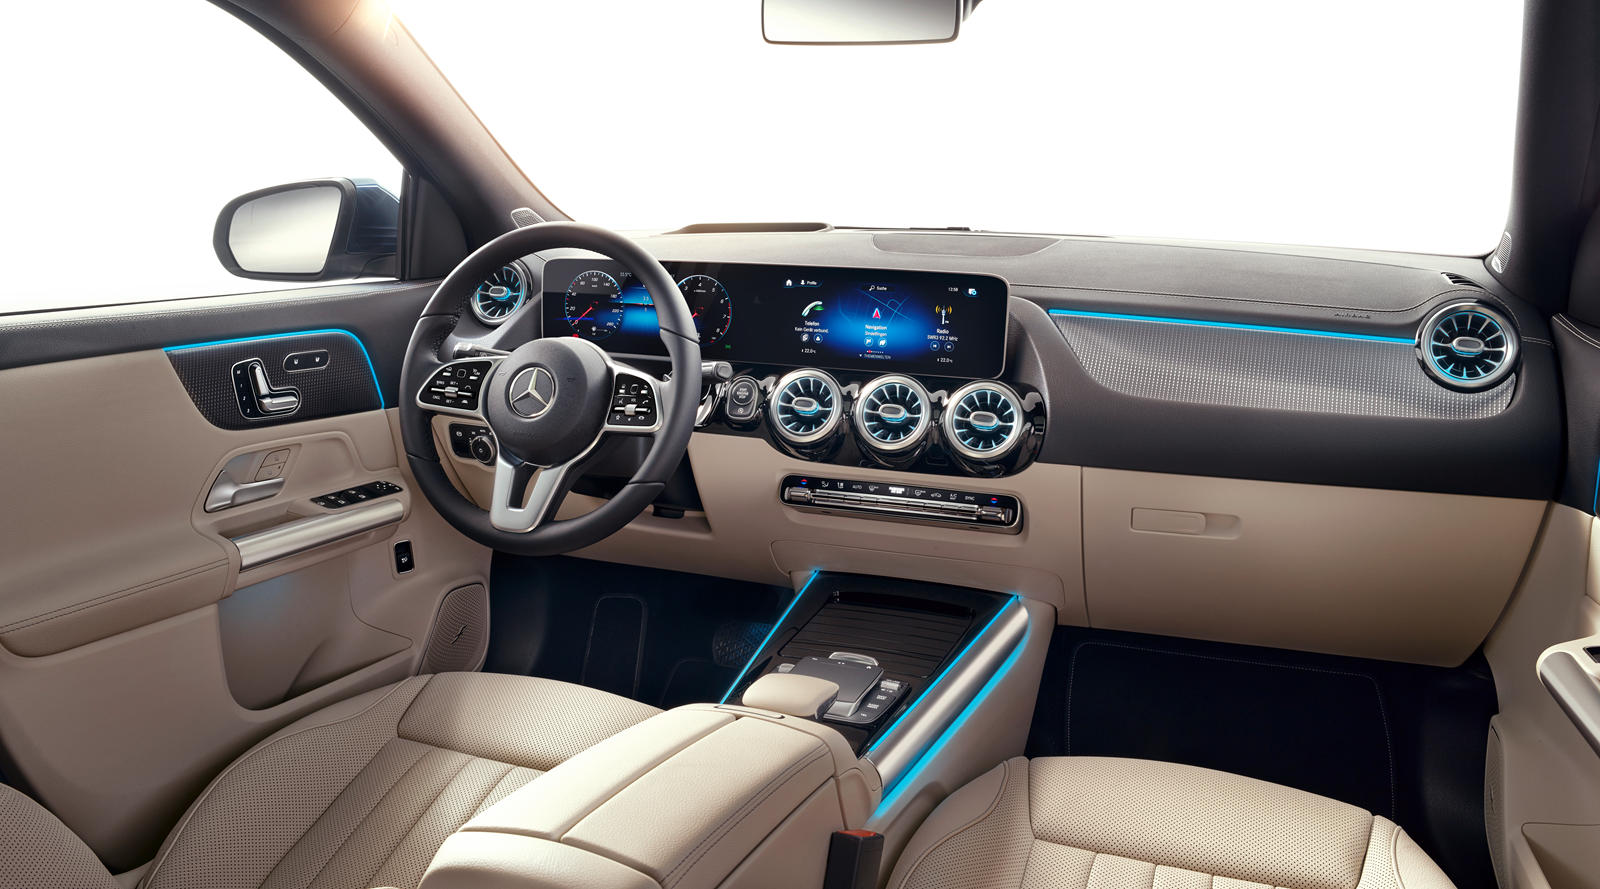 2022 Mercedes-Benz GLA-Class SUV Interior Dimensions: Seating, Cargo Space  & Trunk Size - Photos | CarBuzz